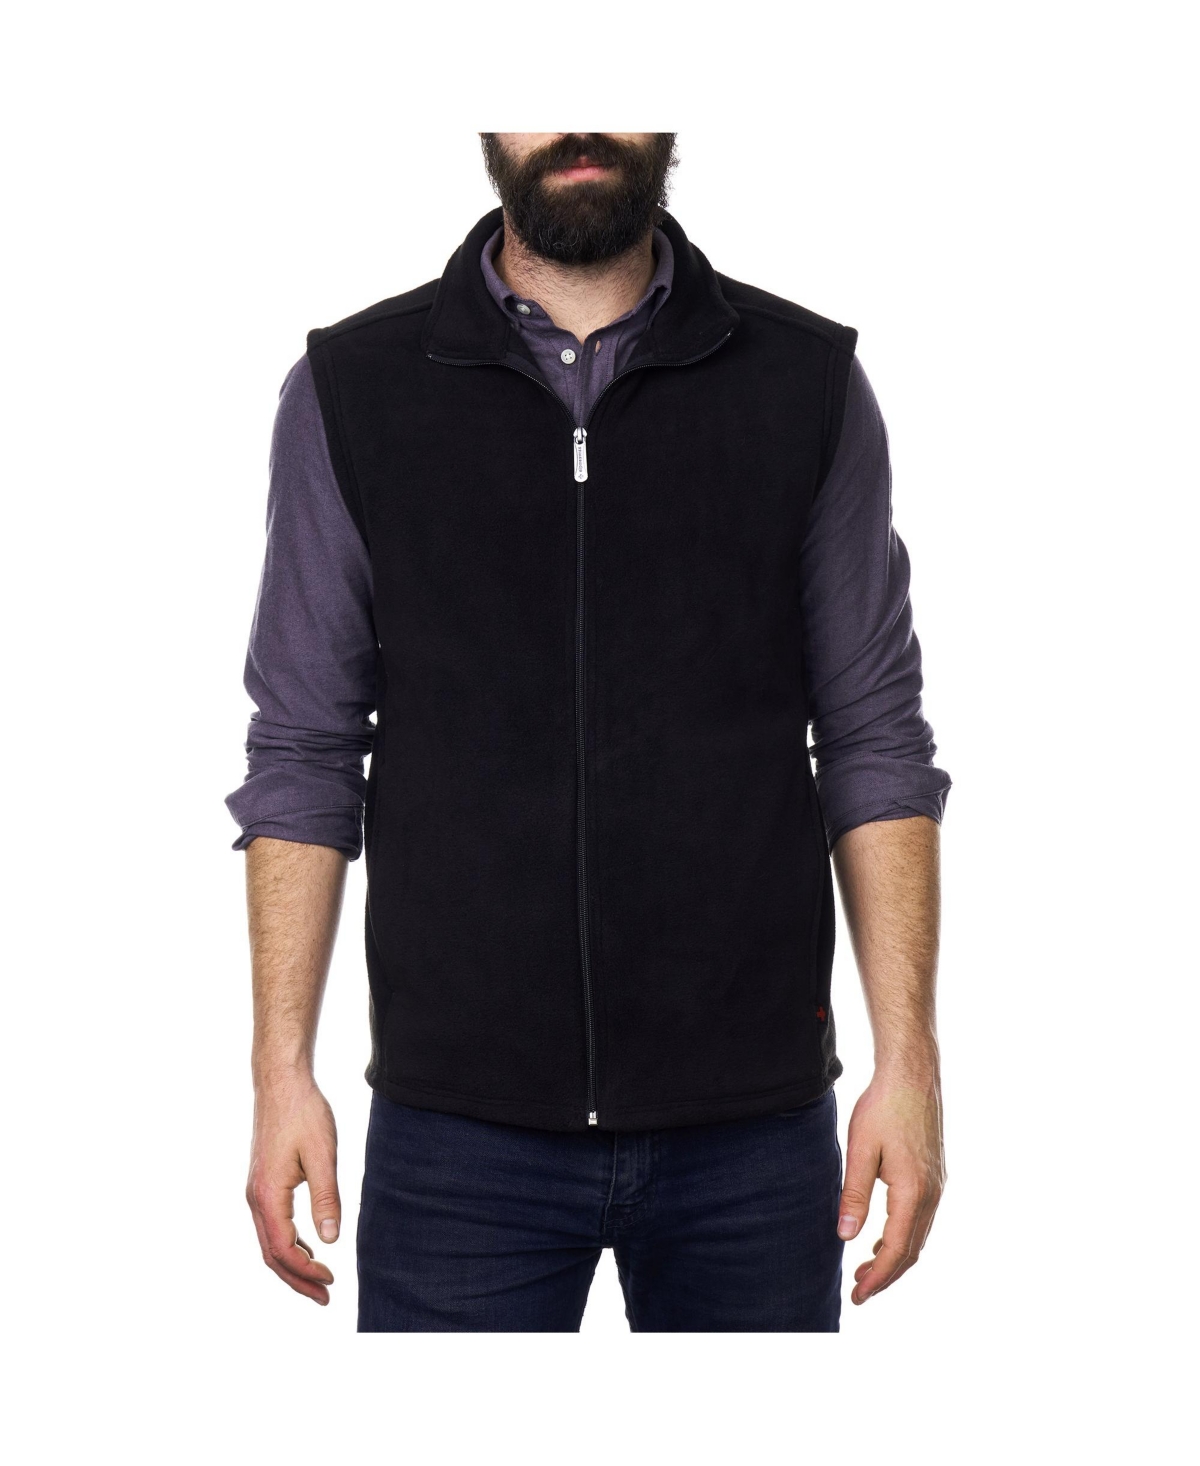 Mens Full Zip Up Fleece Vest Lightweight Warm Sleeveless Jacket - Black